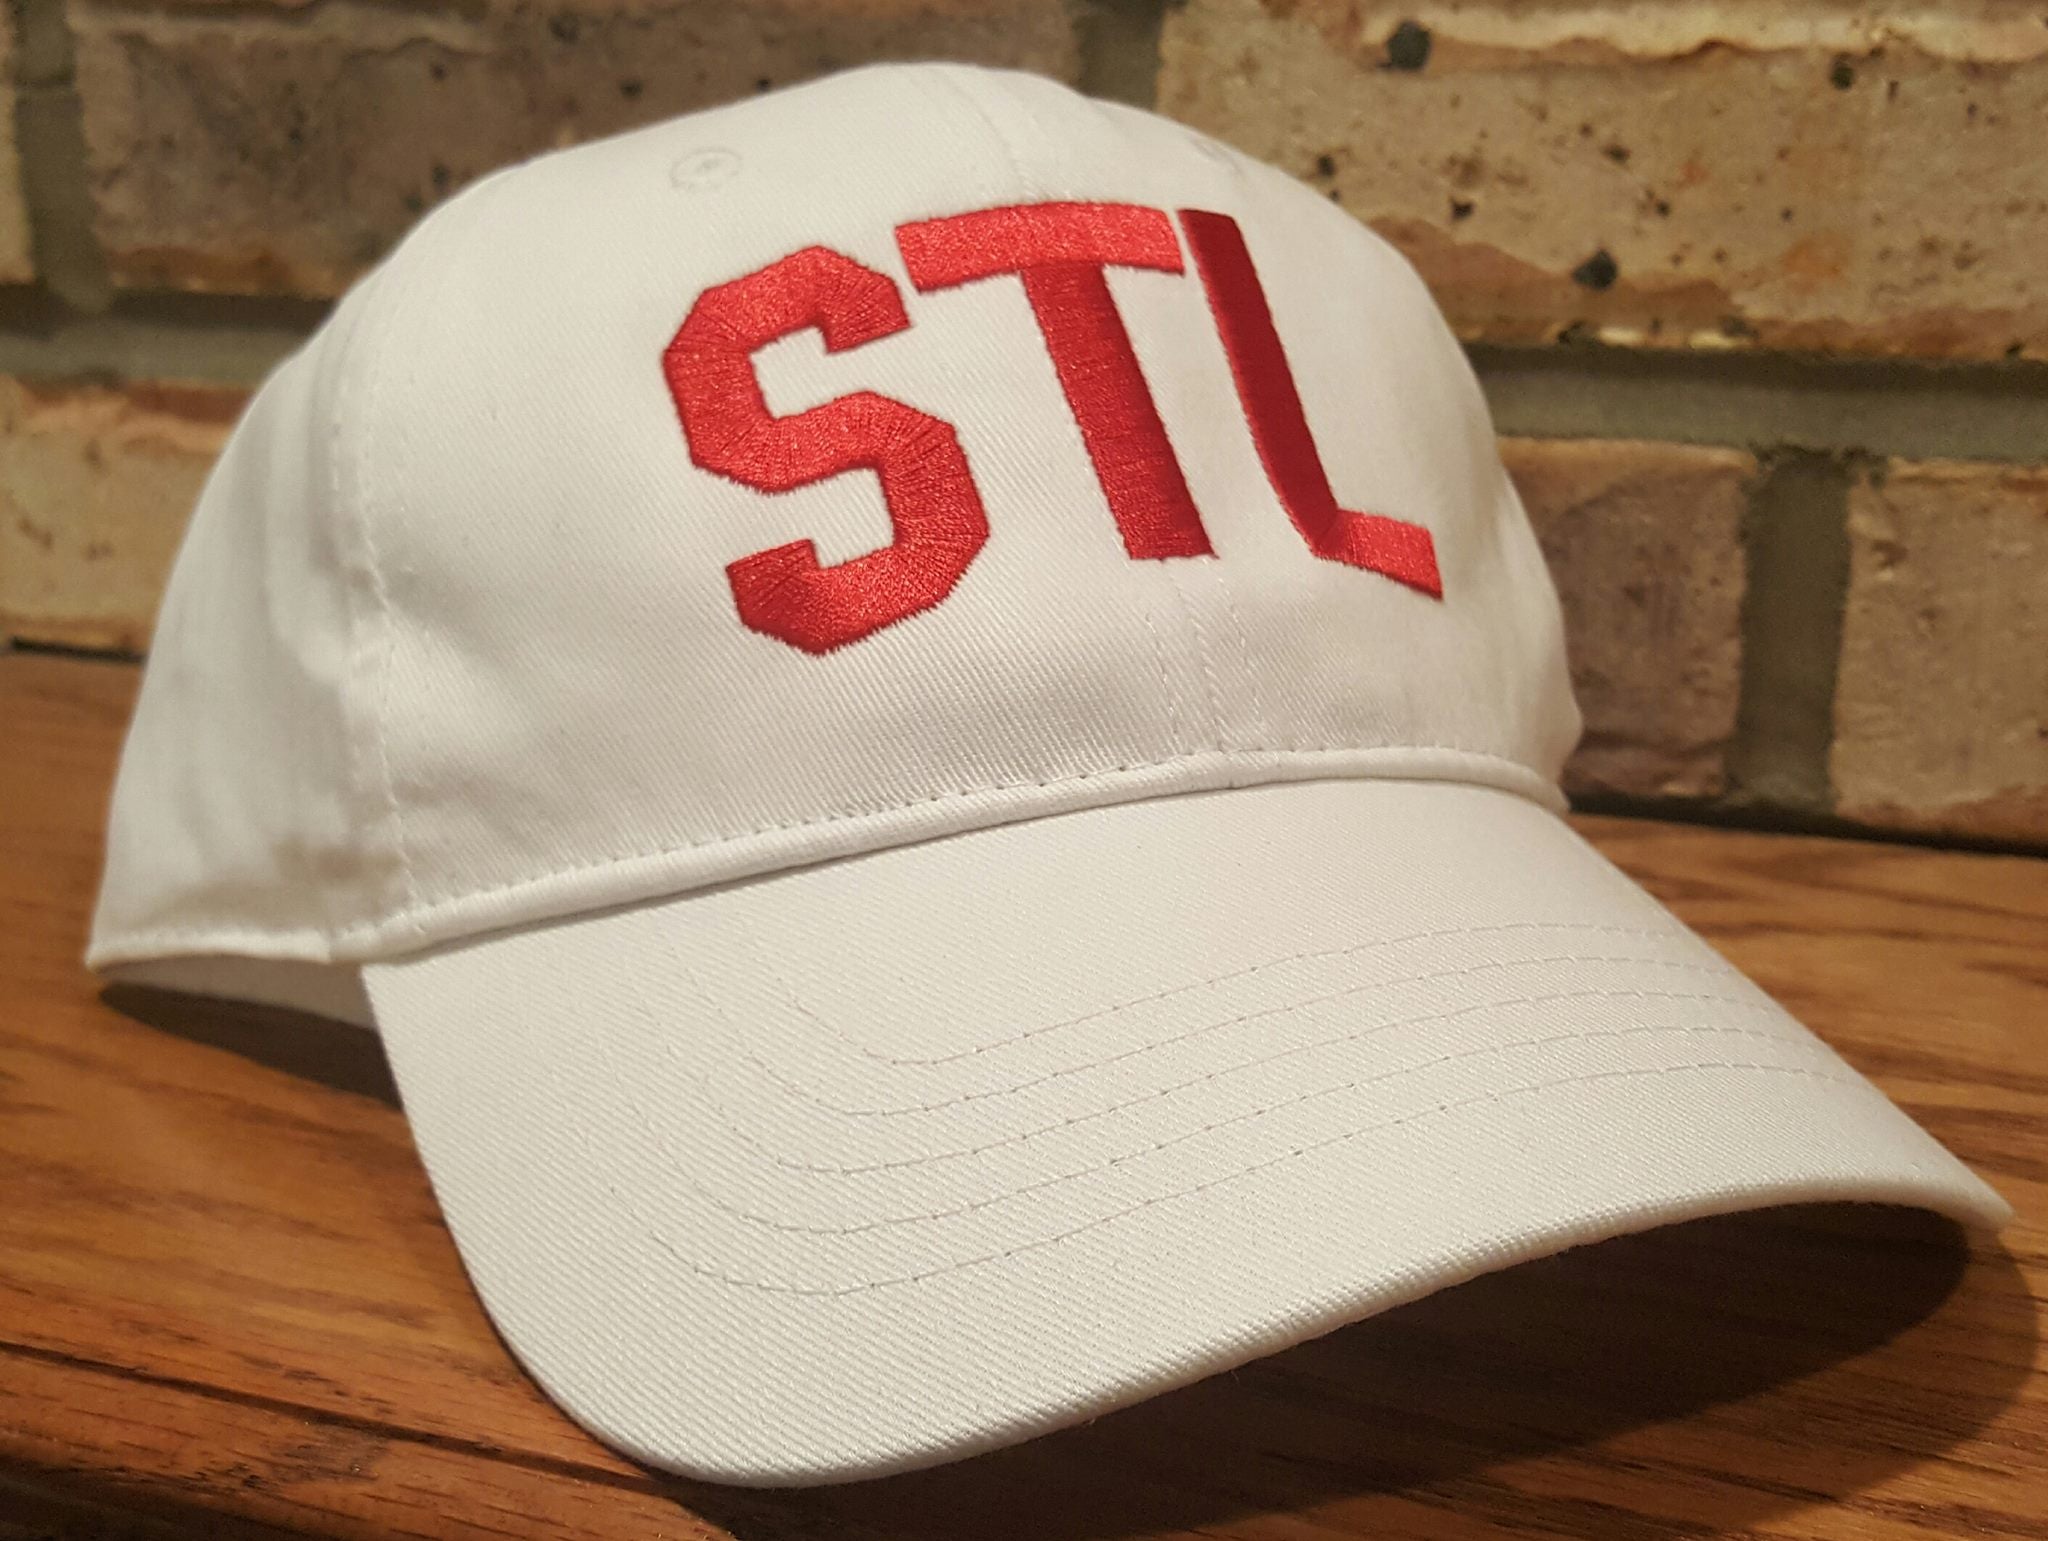 STL Airport Code Baseball Hat - True Color